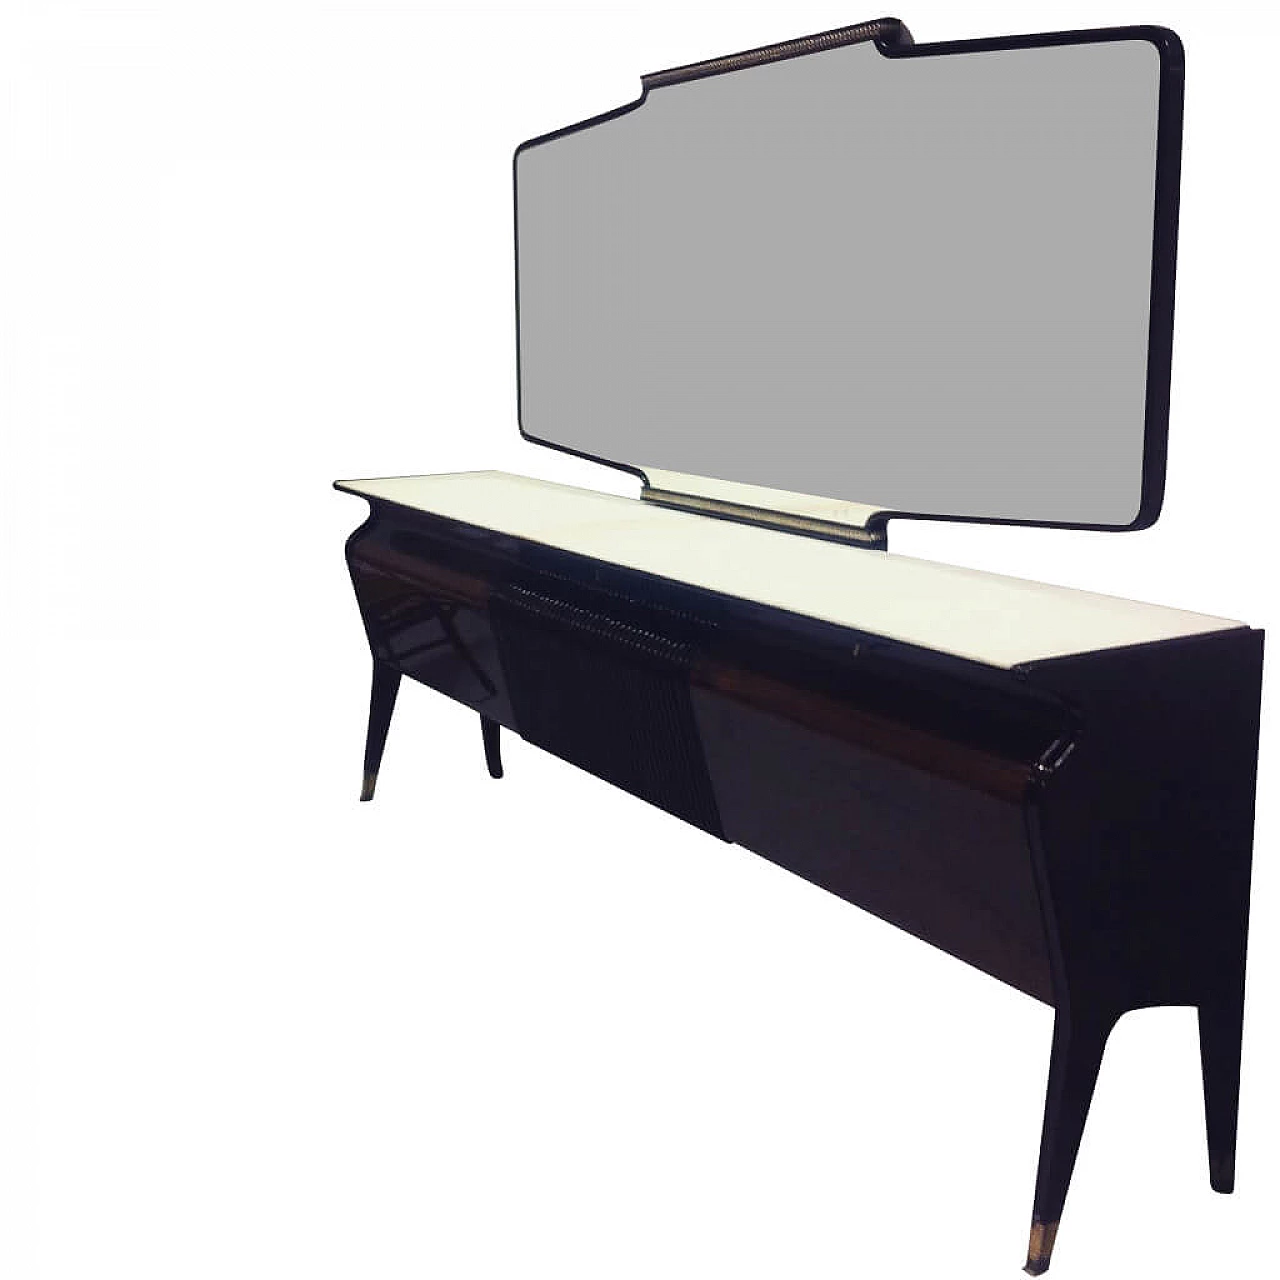 Rosewood sideboard with mirror by Osvaldo Borsani for Arredamenti Borsani, 1952 1132008